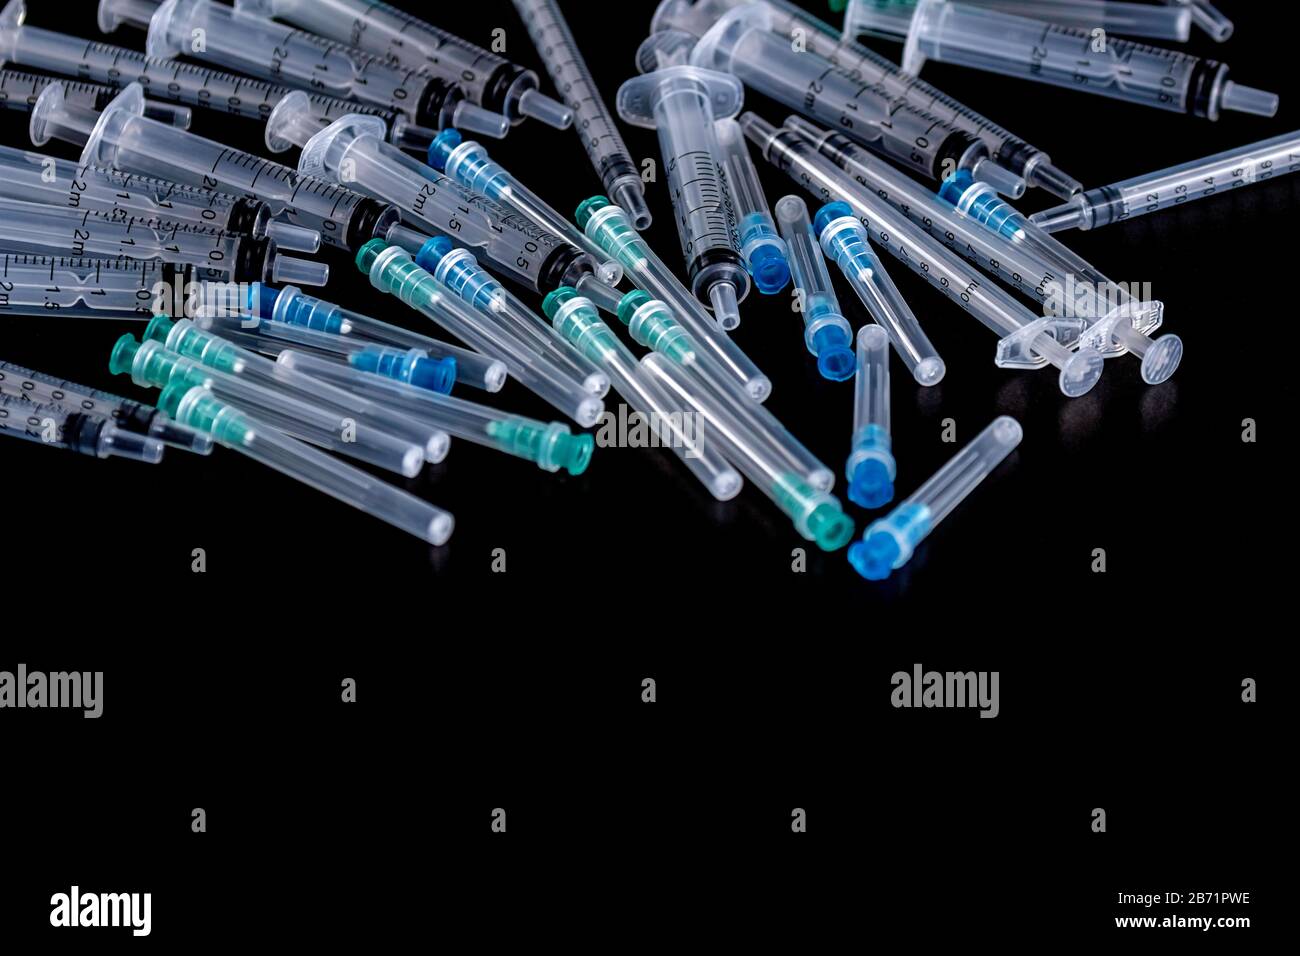 Medical Sterile Syringes Needles, Close up Syringes on Black Background, Health care concept. Stock Photo